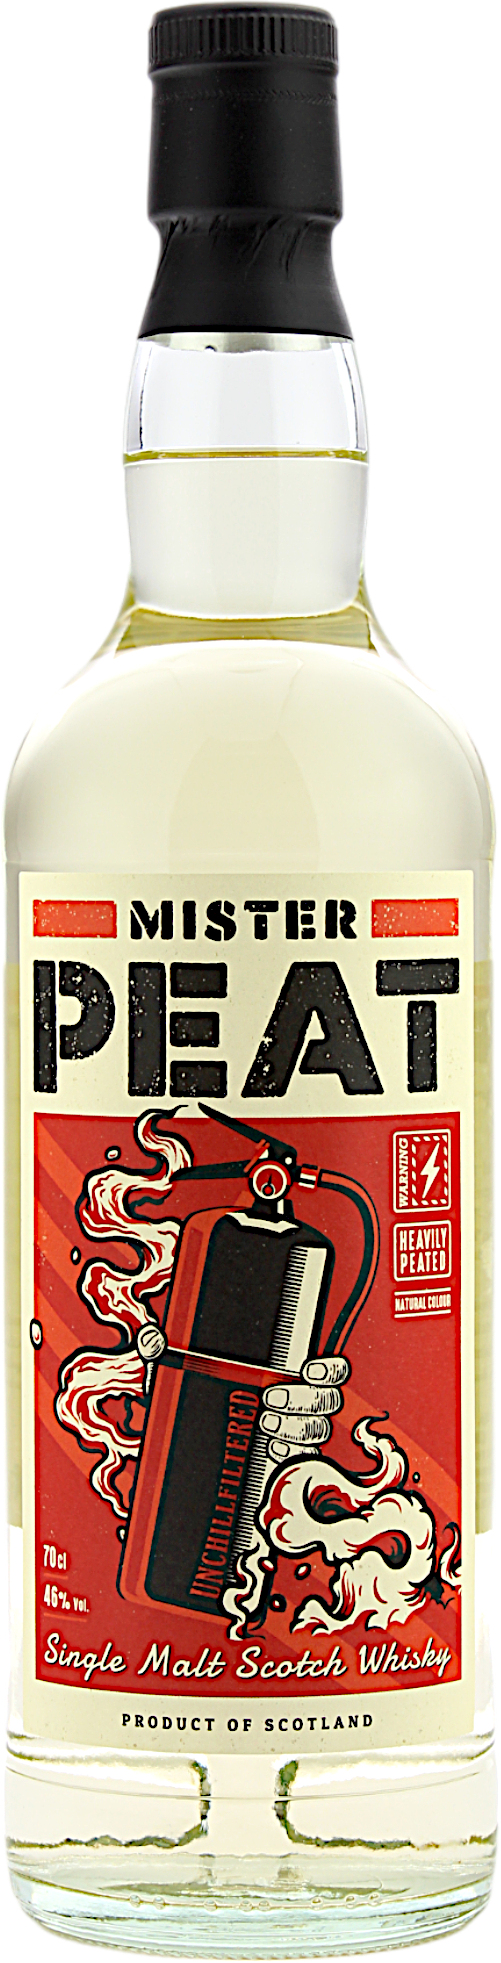 Mister Peat Single Malt Scotch Whisky Heavily Peated 46.0% 0,7l